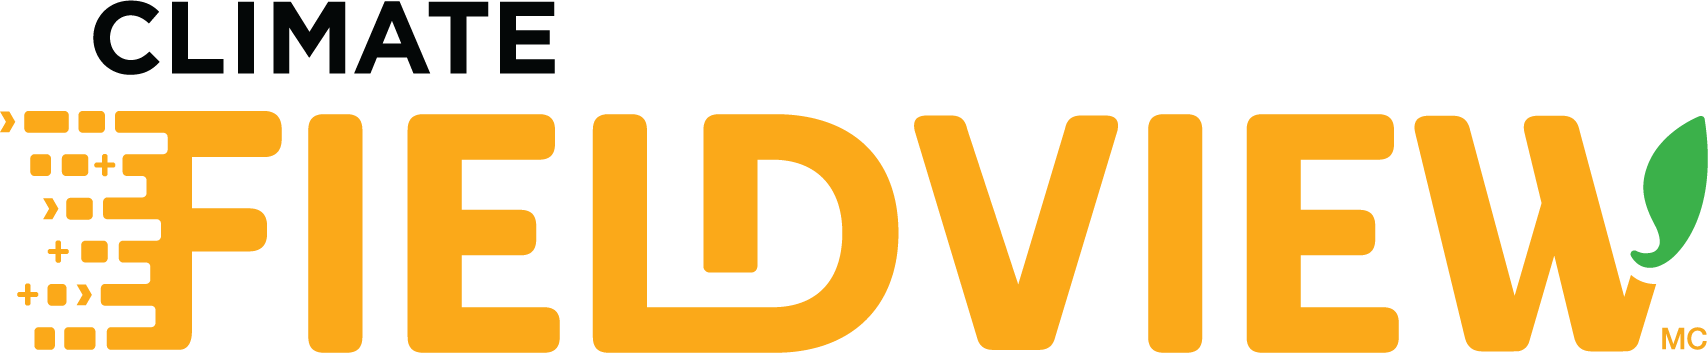 climate fieldview logo